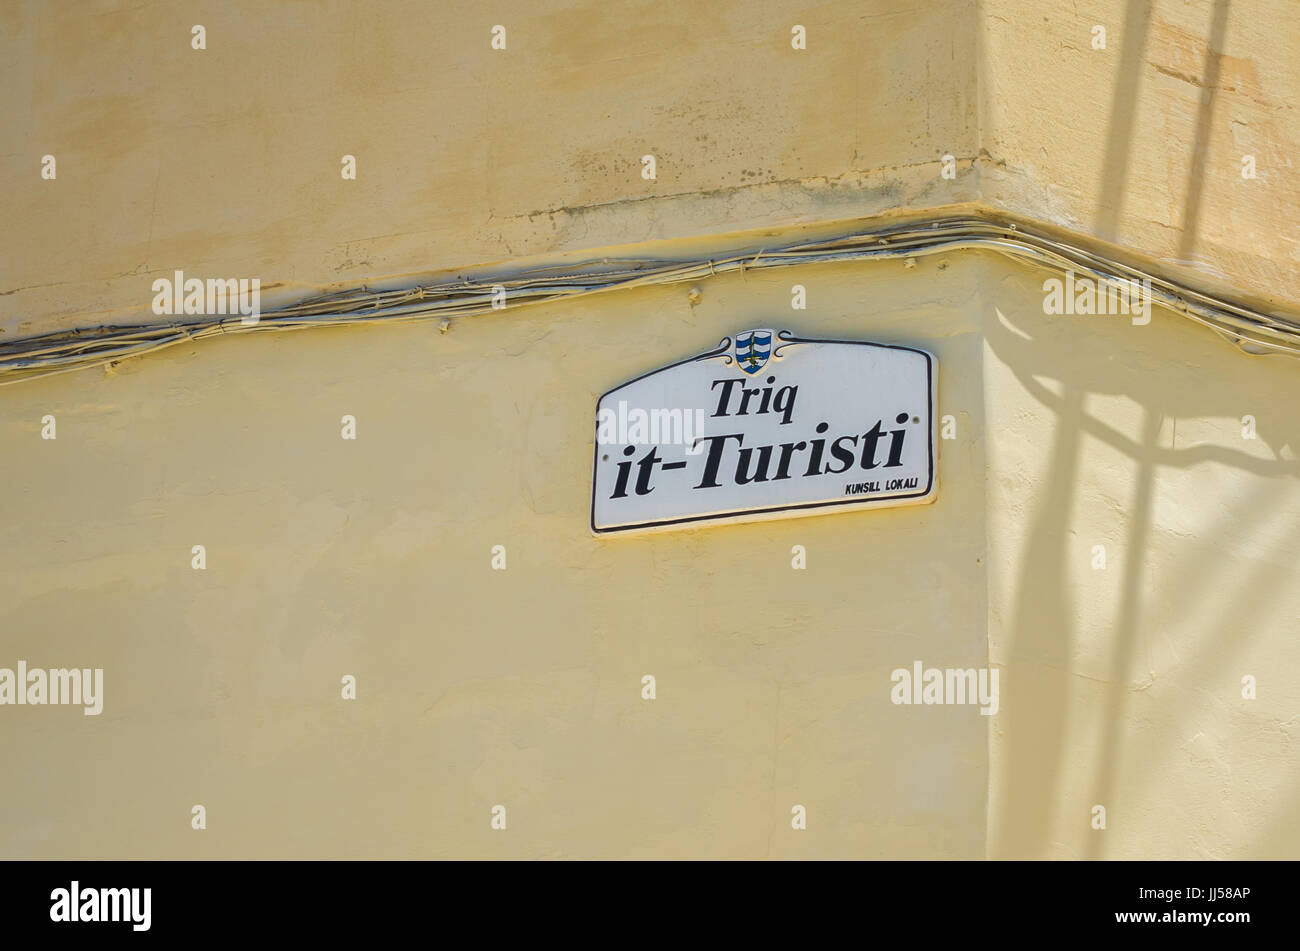 Malta, Bugibba: Typical Maltese street name sign. Stock Photo